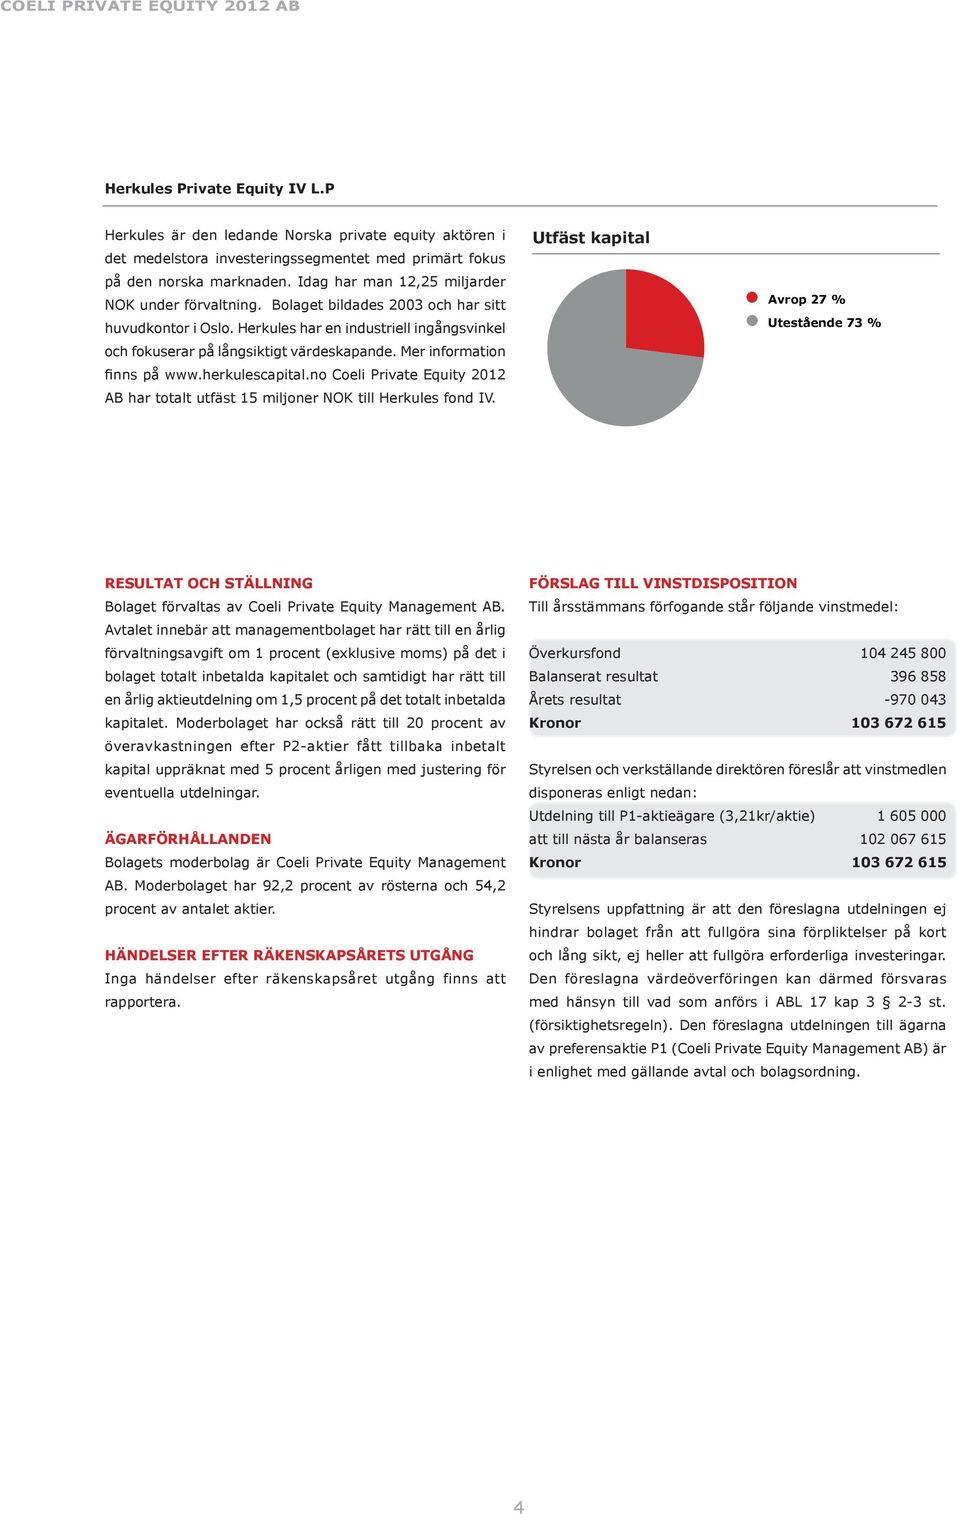 Mer information finns på www.herkulescapital.no Coeli Private Equity 2012 AB har totalt utfäst 15 miljoner NOK till Herkules fond IV.